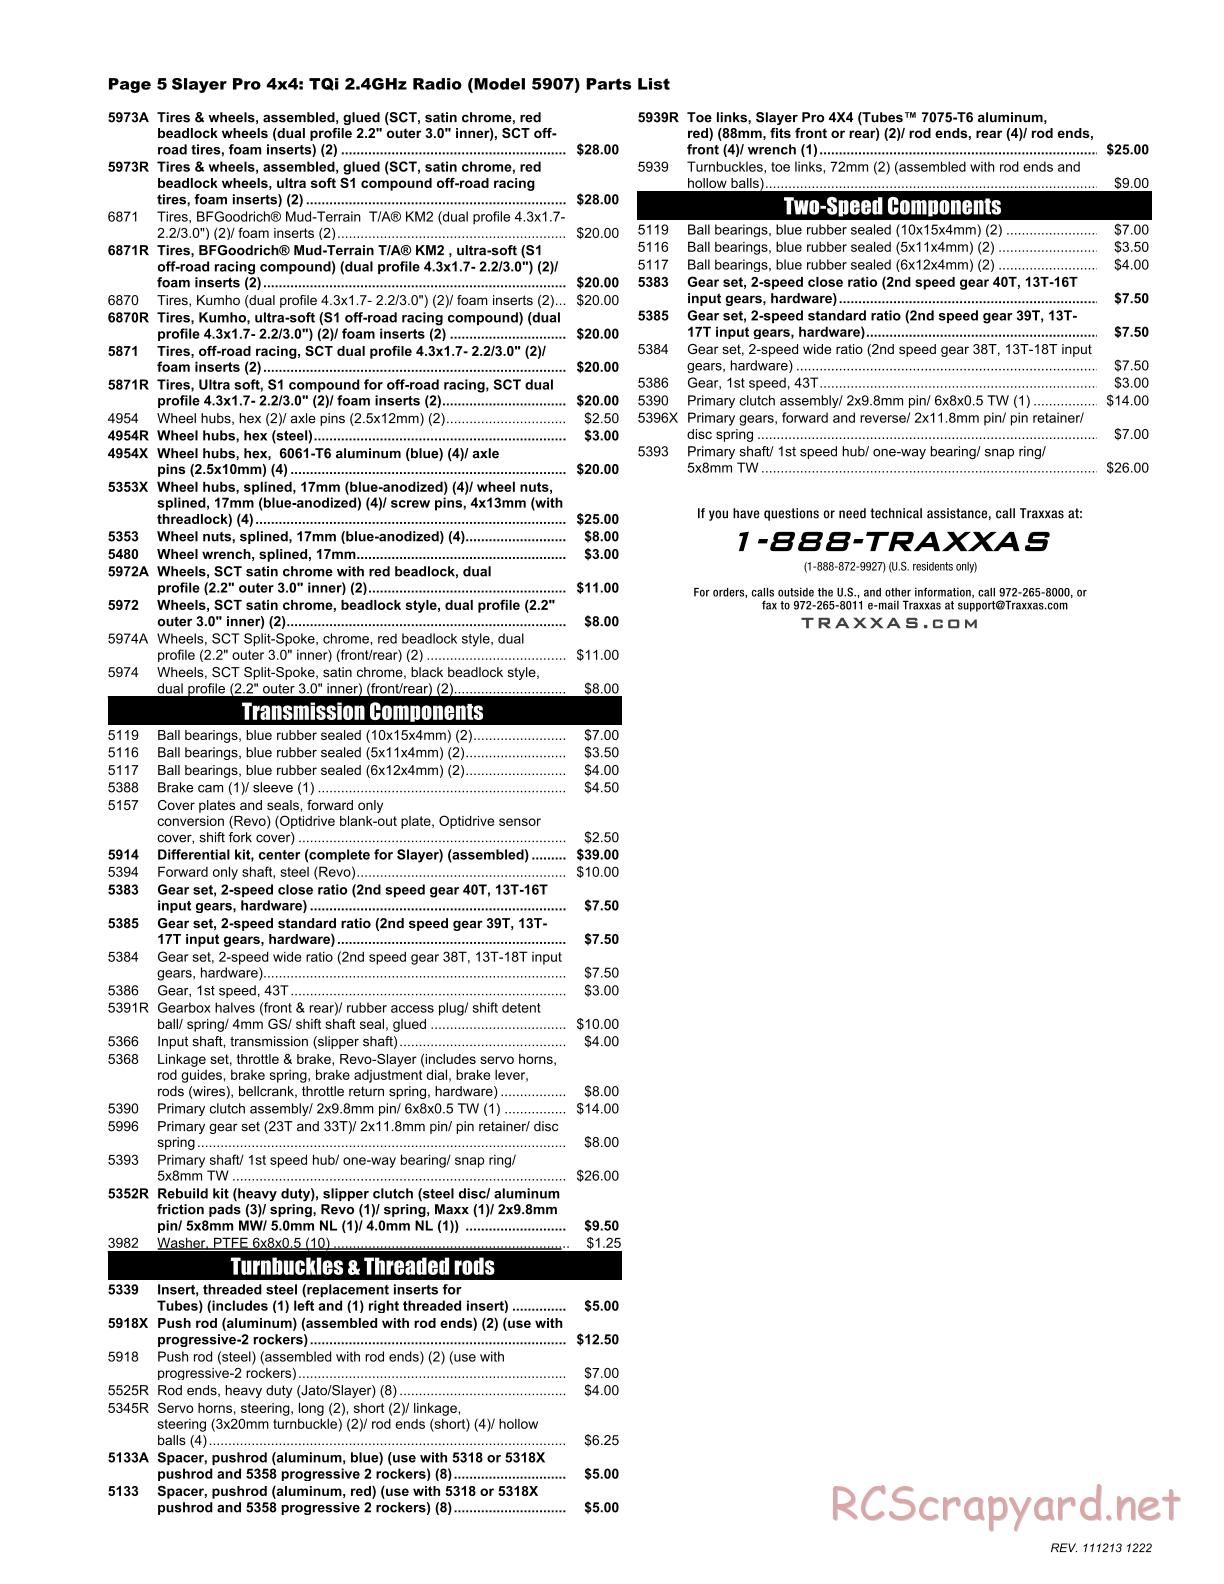 Traxxas - Slayer Pro 4x4 - Parts List - Page 5